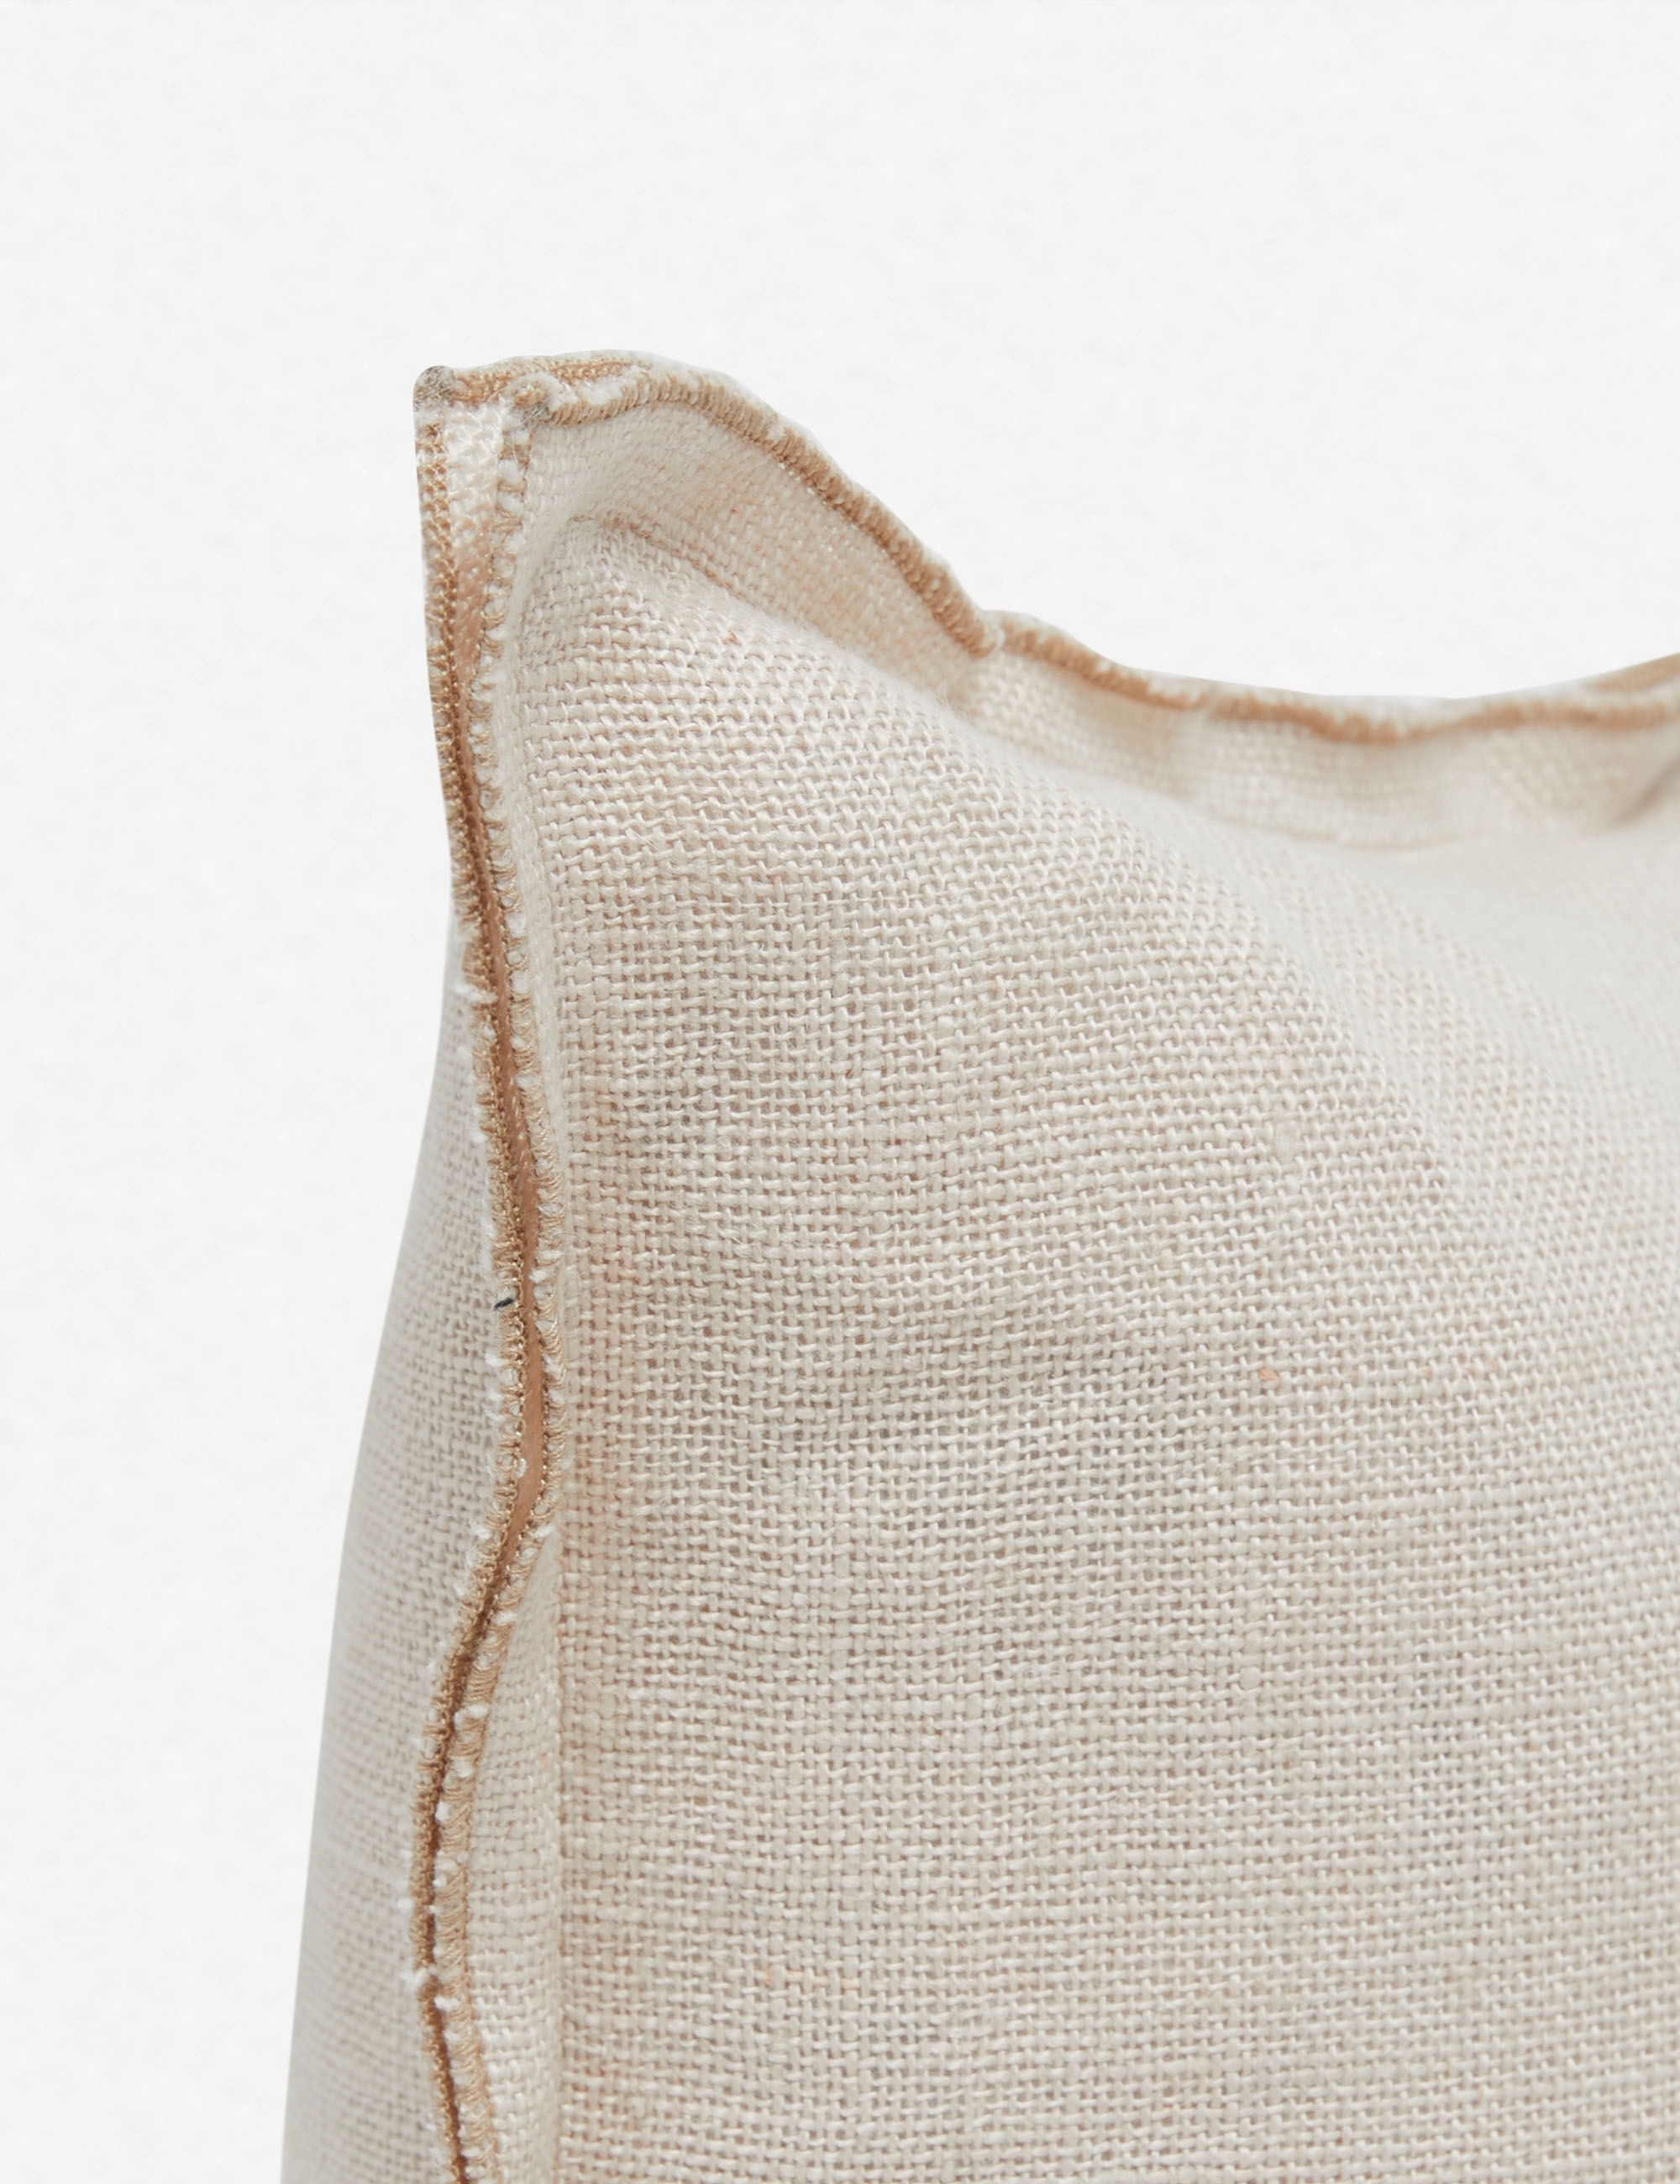 Arlo Linen Pillow, Light Natural - Image 1